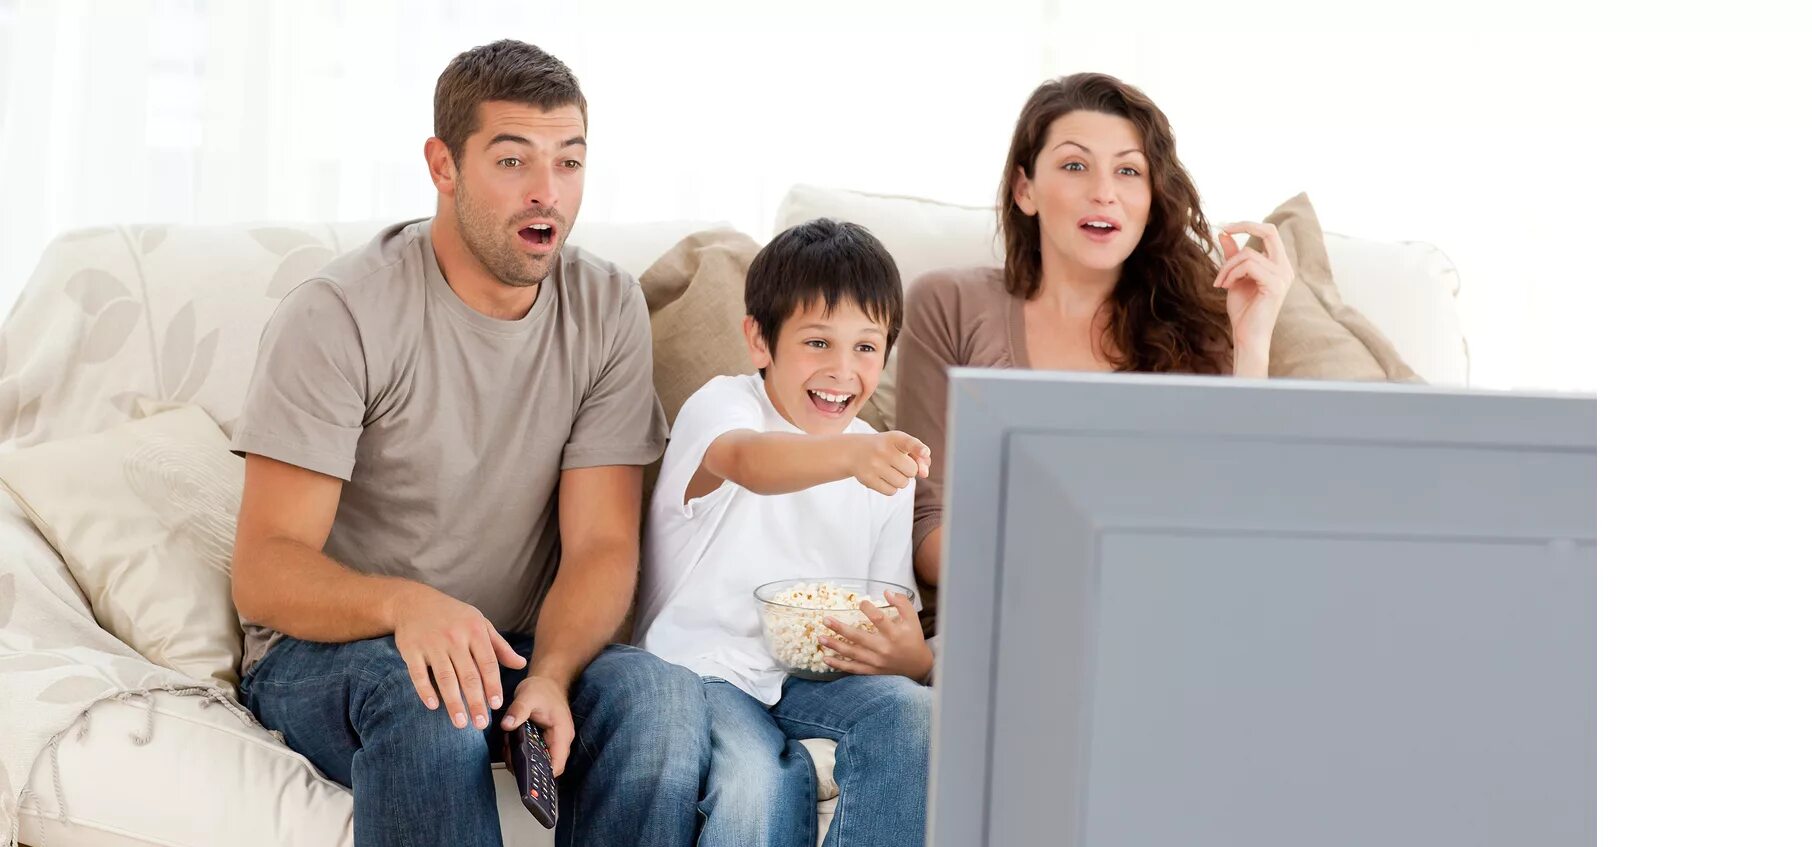 Семейный просмотр пин. Семья у телевизора. Семья на диване перед телевизором. Семья смотрит телевизор. Счастливая семья у телевизора.